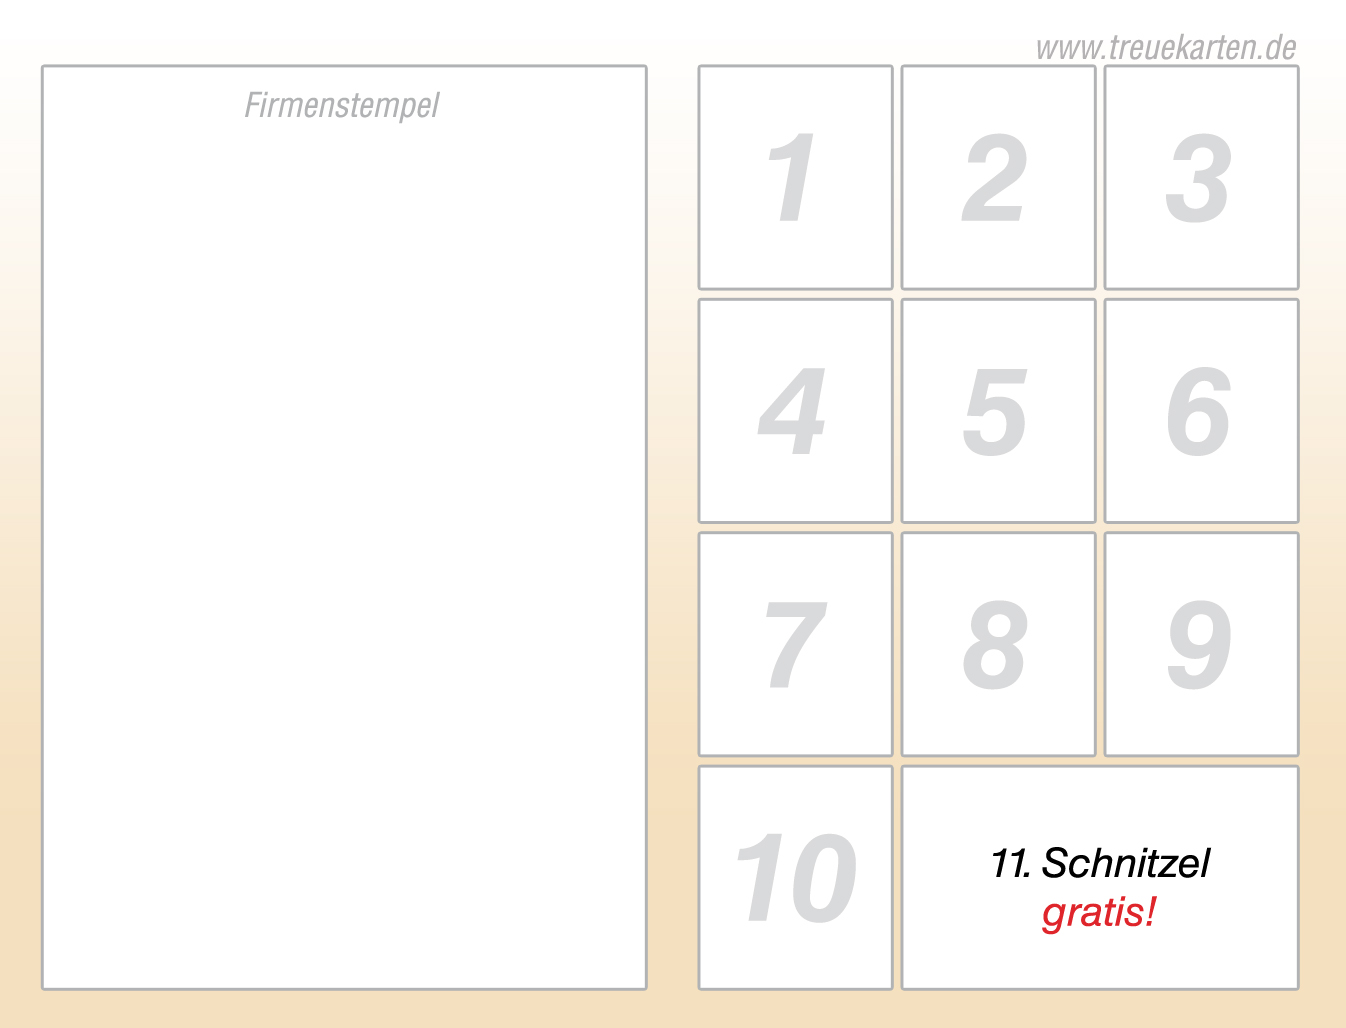 Treuekarte Bonuskarte "Schnitzel" Klappkarte Kundenkarte Premium Perlmutt